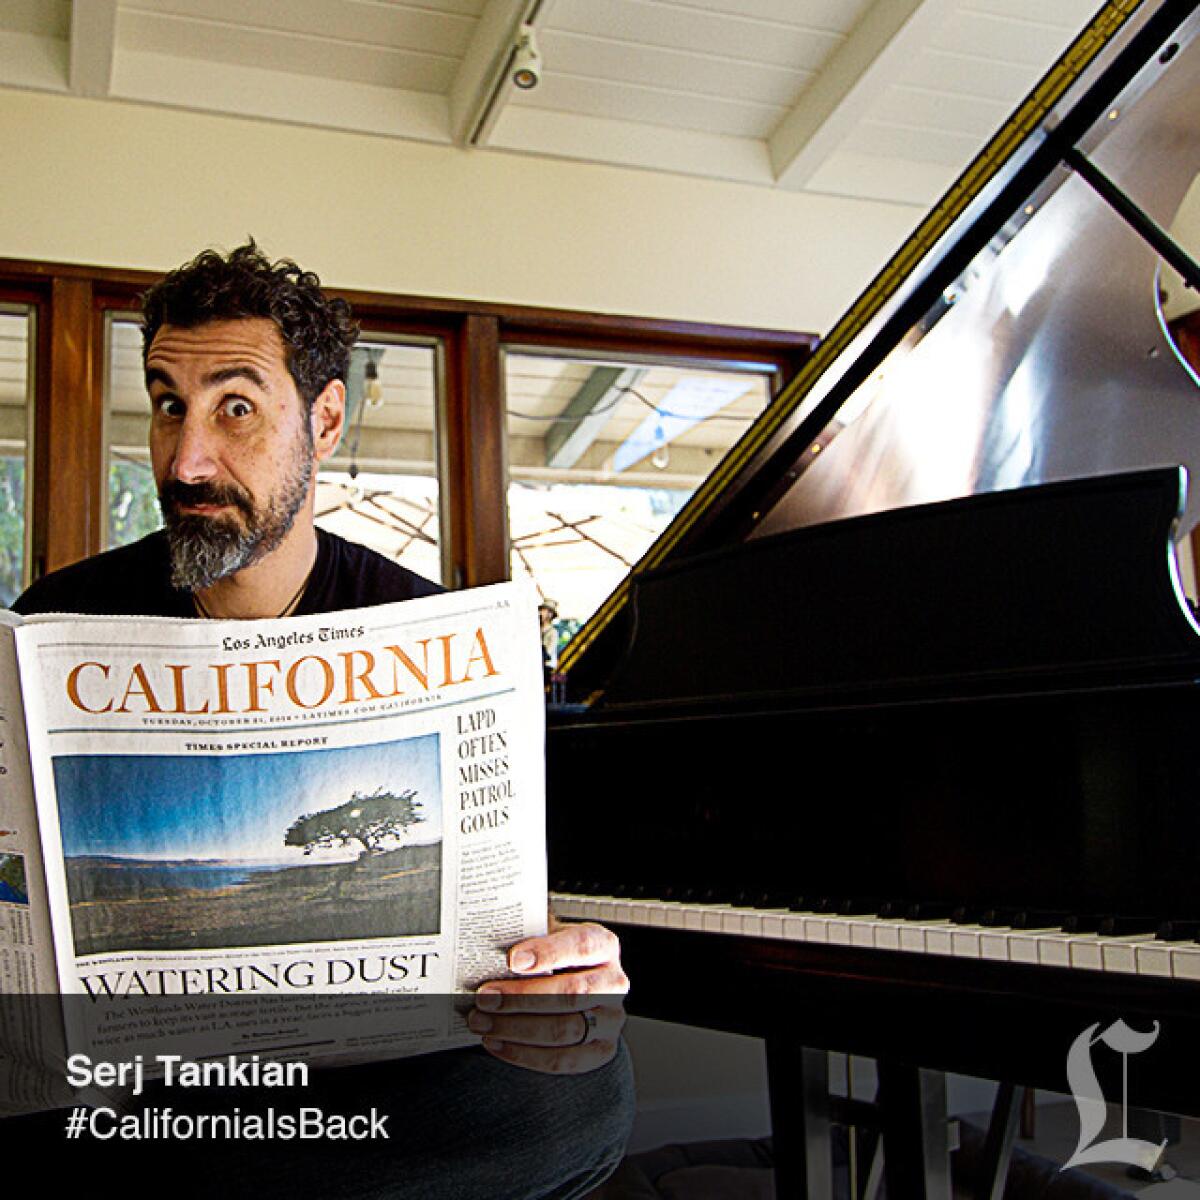 Serj Tankian, Singer, Composer and Activist.